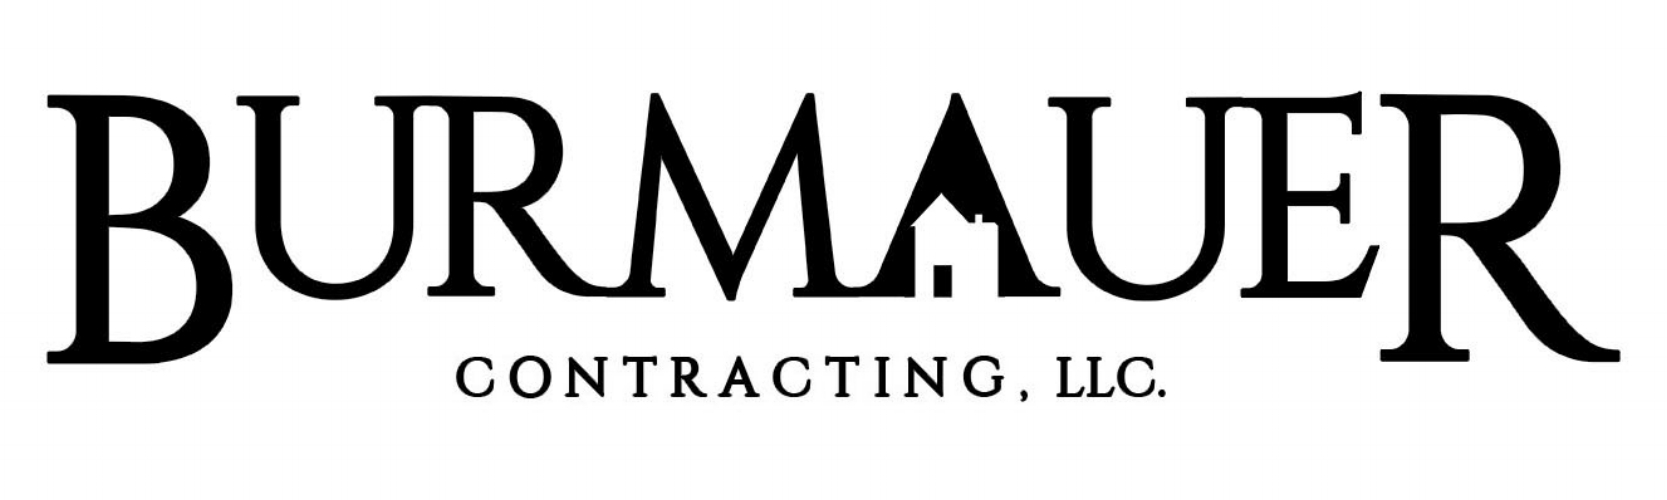 BURMAUER LLC